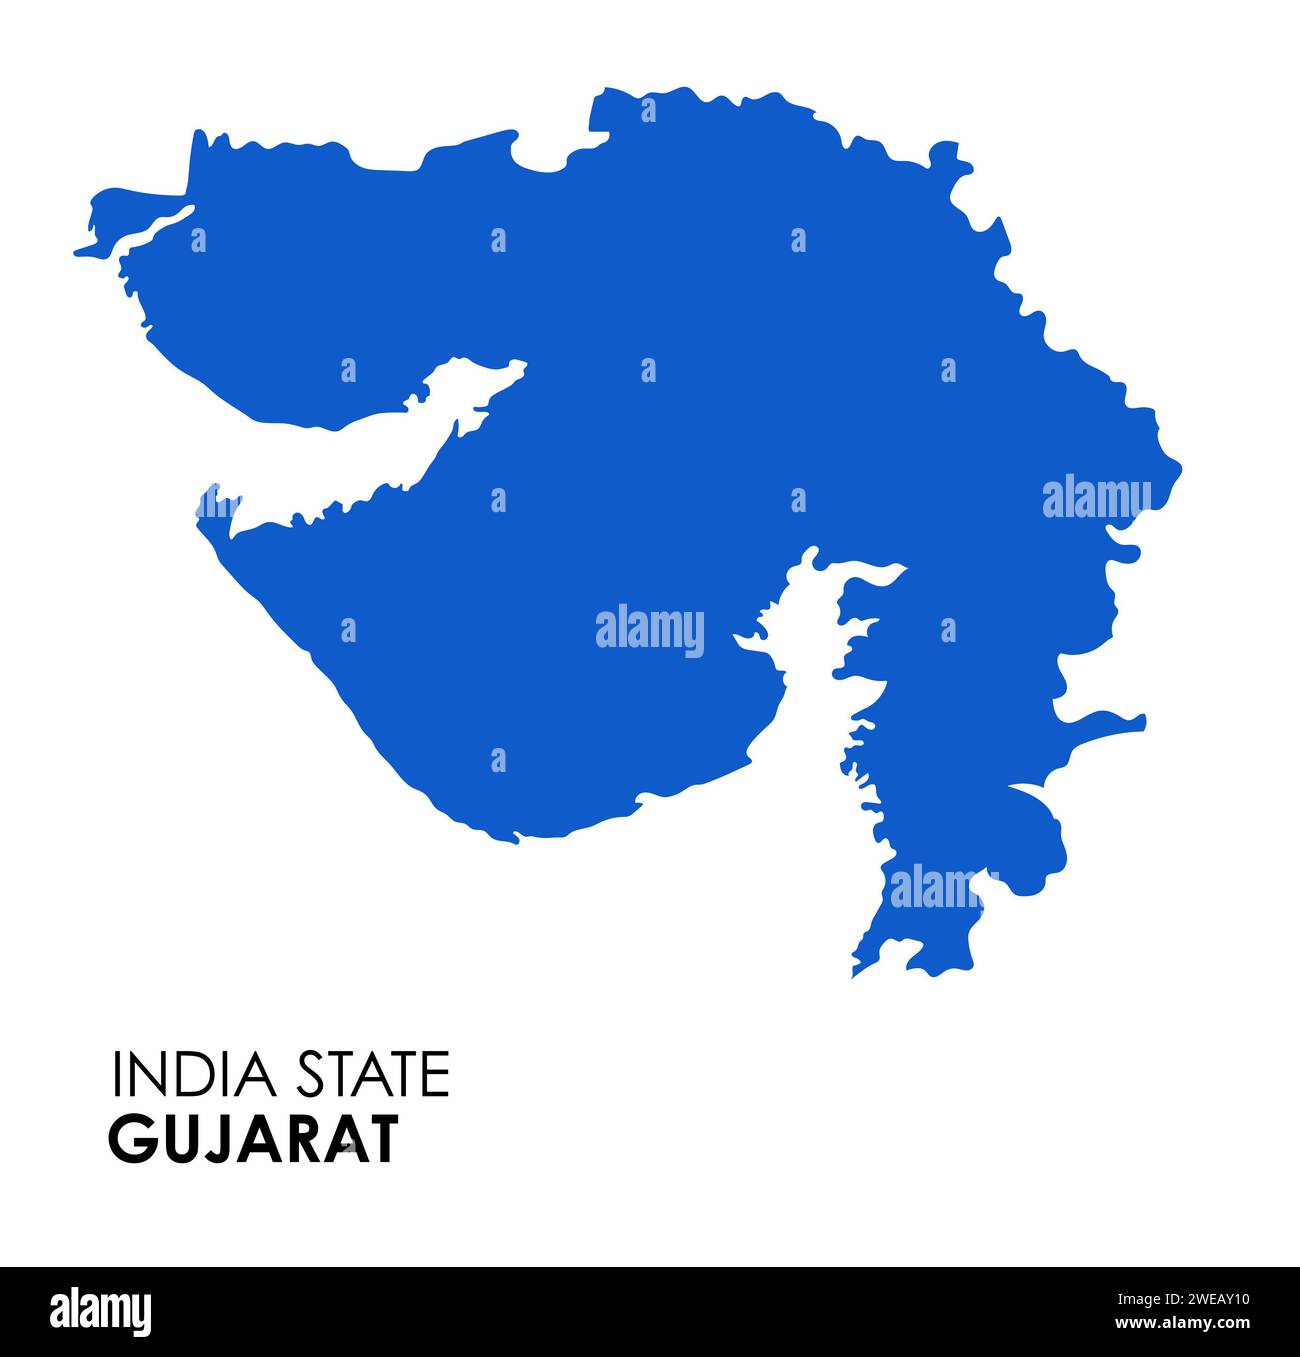 Gujarat map of Indian state. Gujarat map vector illustration. Gujarat map on white background. Stock Photo